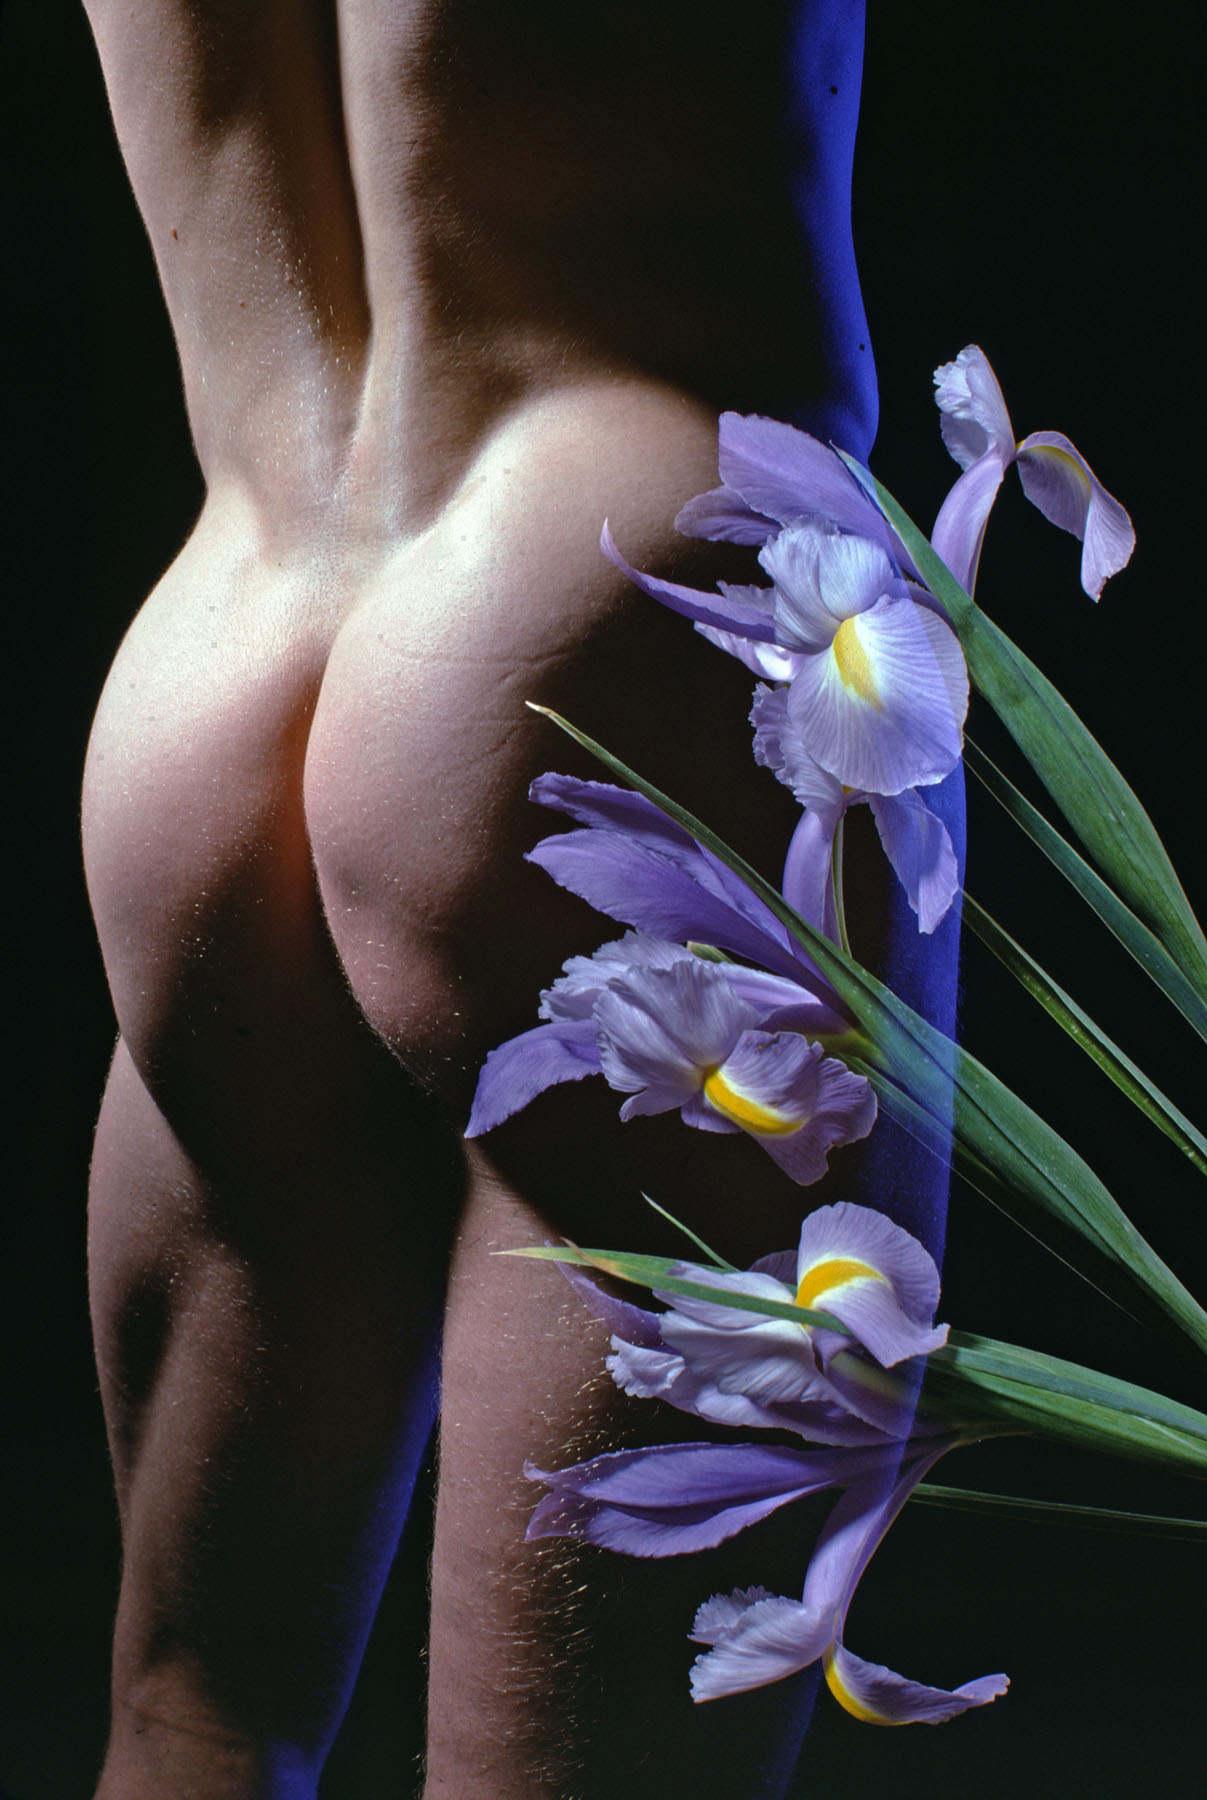 Jack Mitchell Nude Photograph - Dancer Edmond LaFosse, multiple exposure nude study for After Dark 